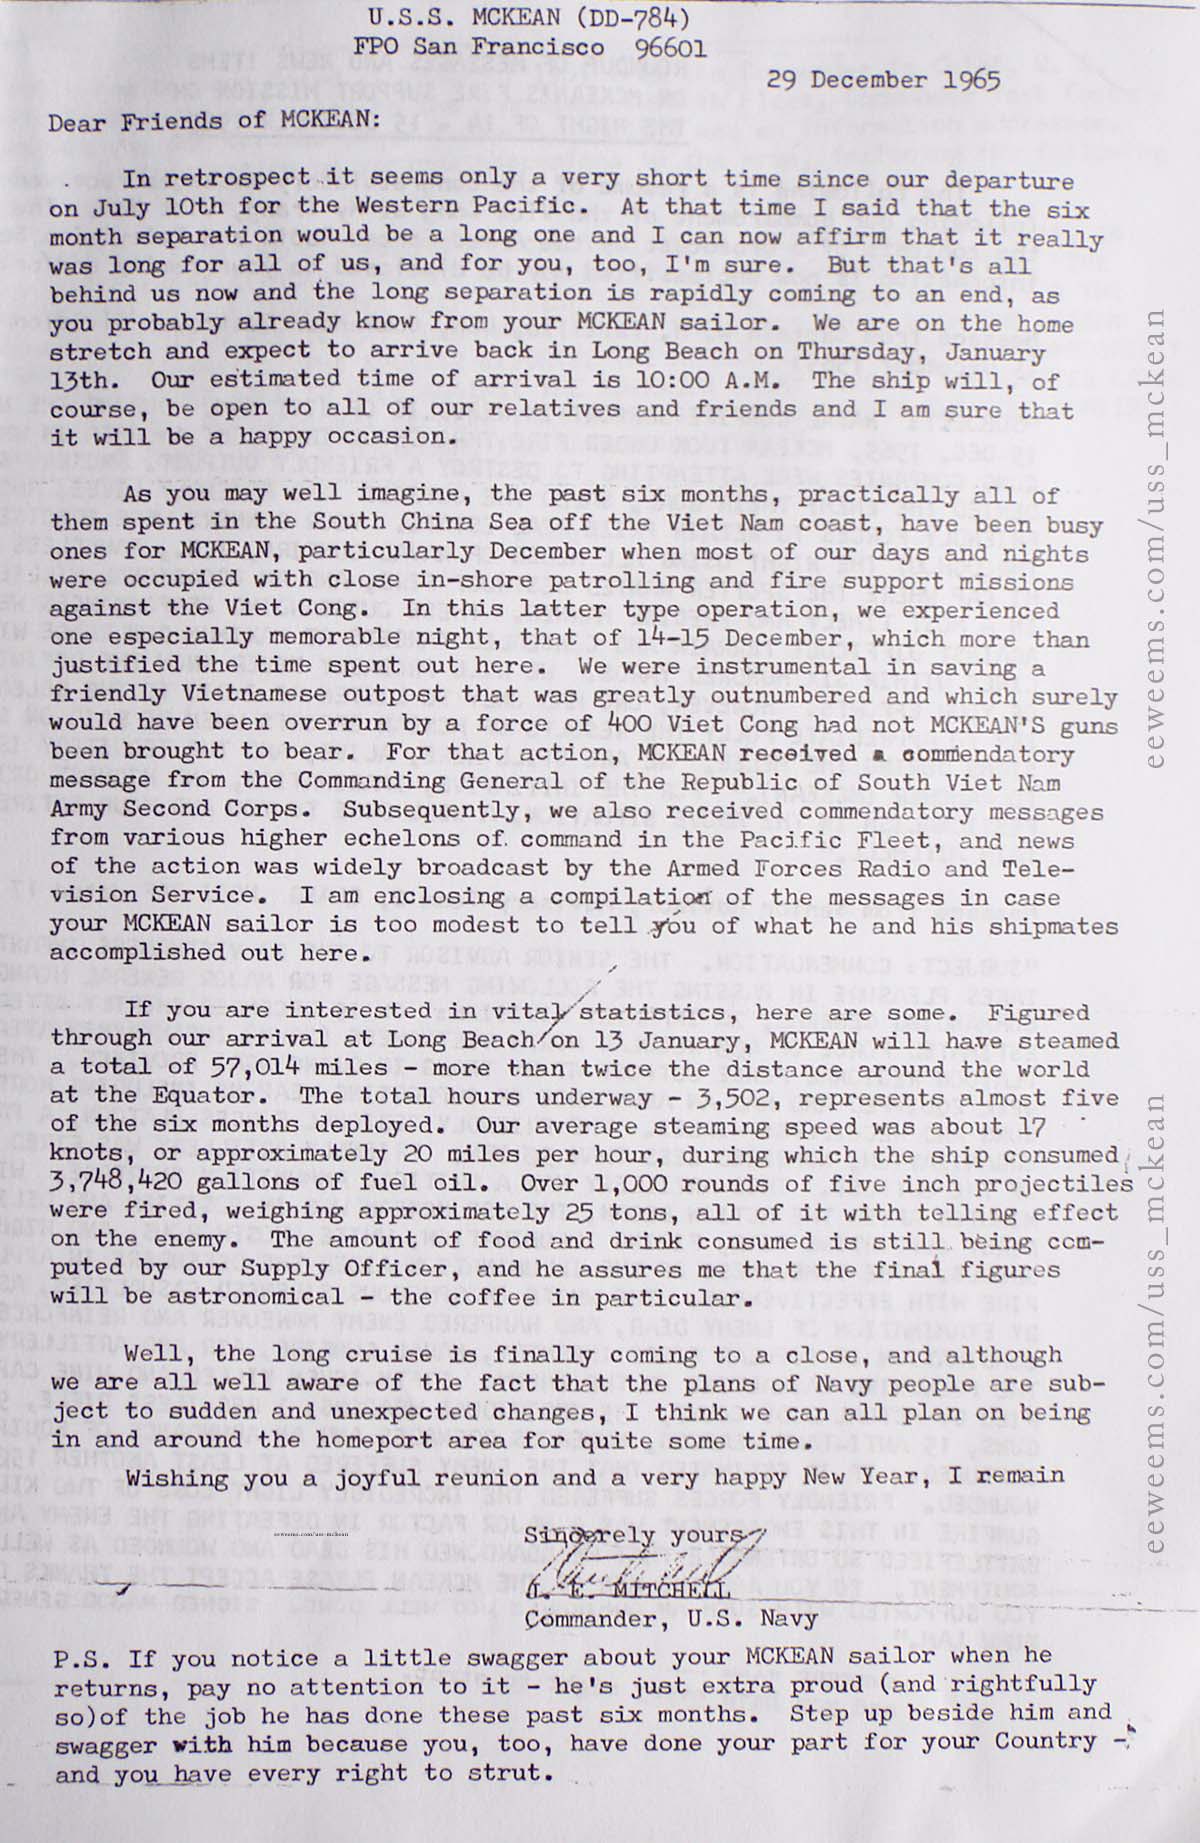 USS McKean Letter from Commander concerning Vietnam activity